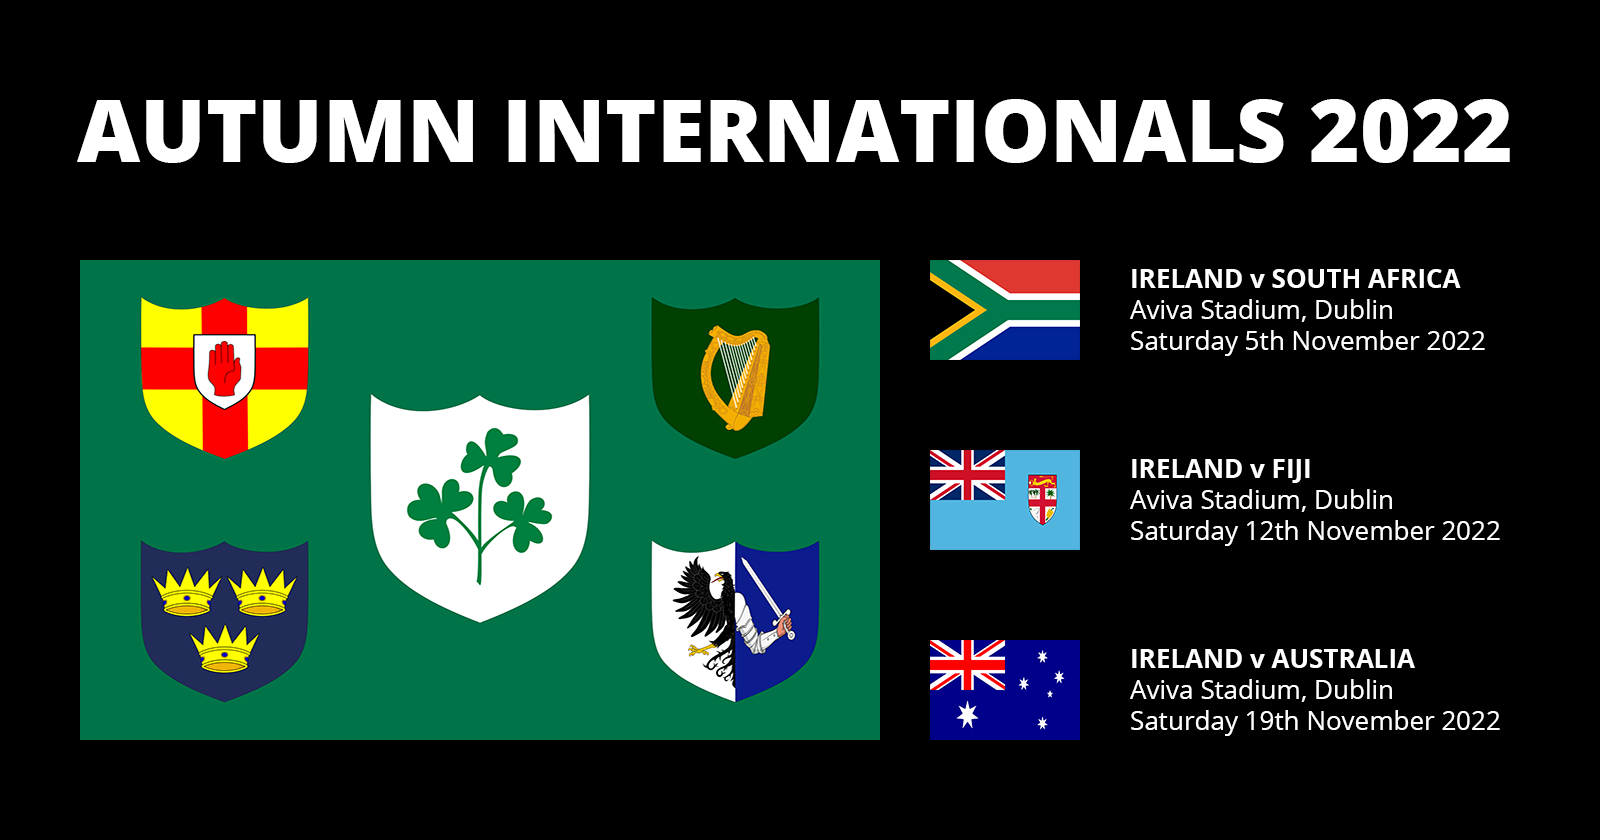 Ireland Autumn Internationals 2022 Rugby Fixtures